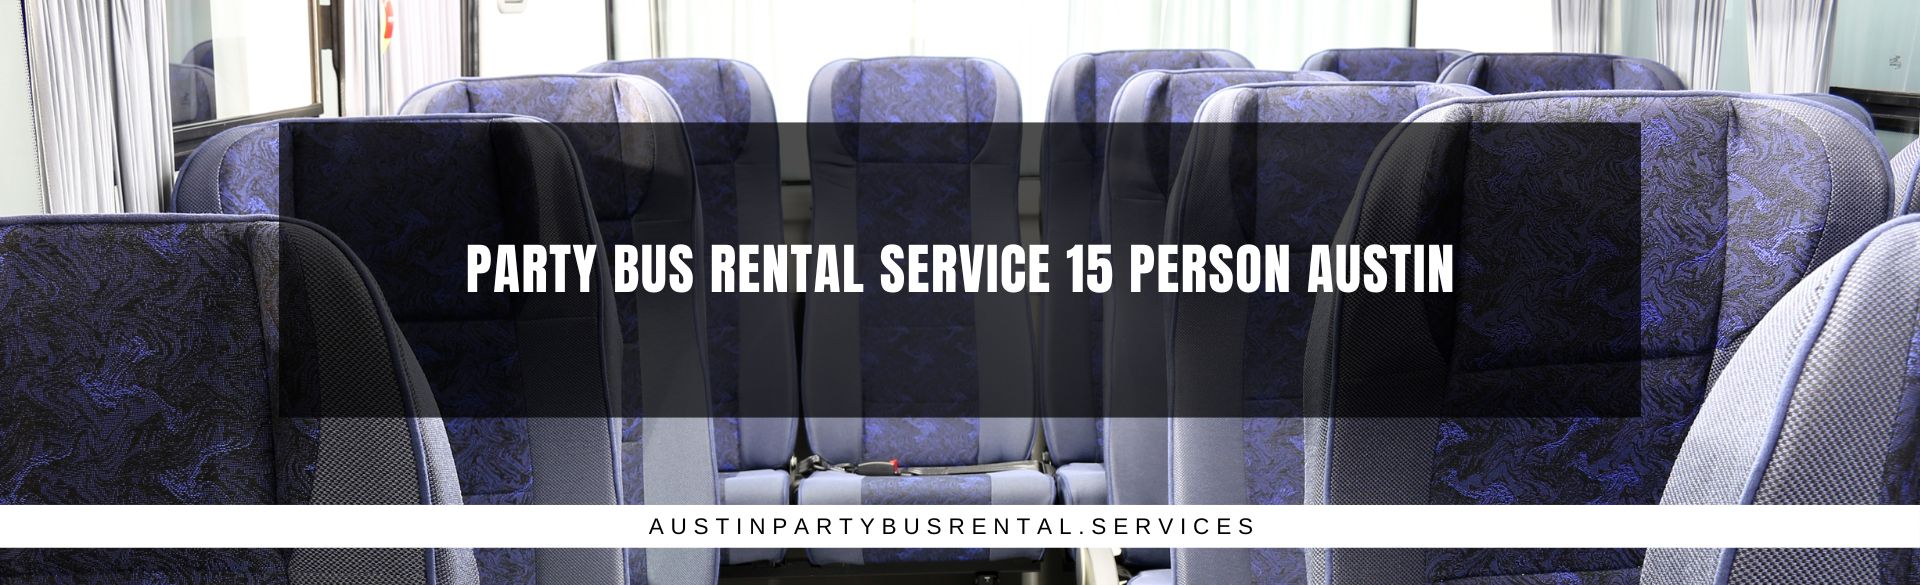 Party Bus Rental Service 15 Person Austin